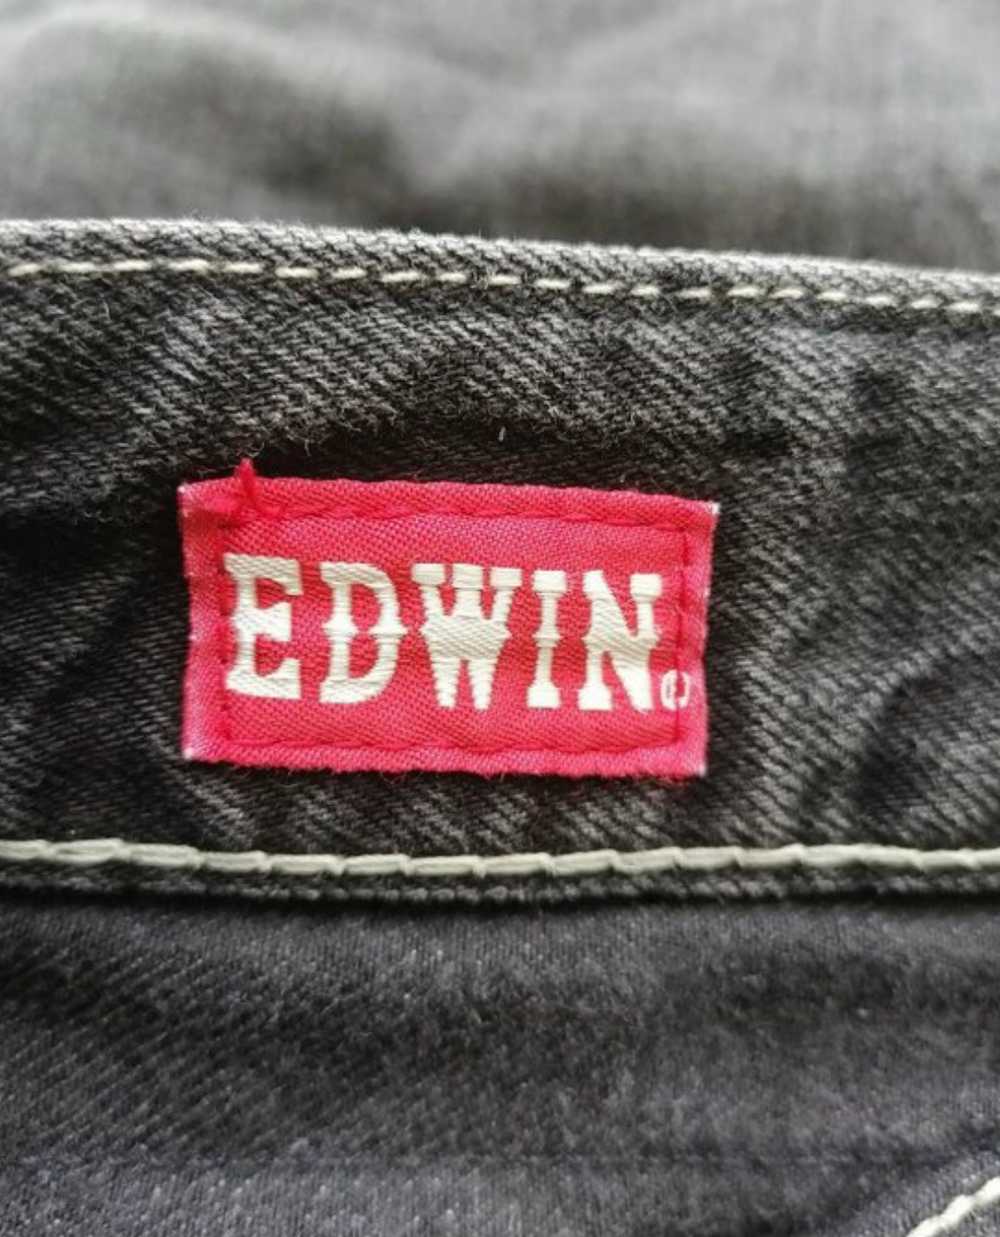 Edwin Made In Japan Selvedge Denim Jeans - image 6